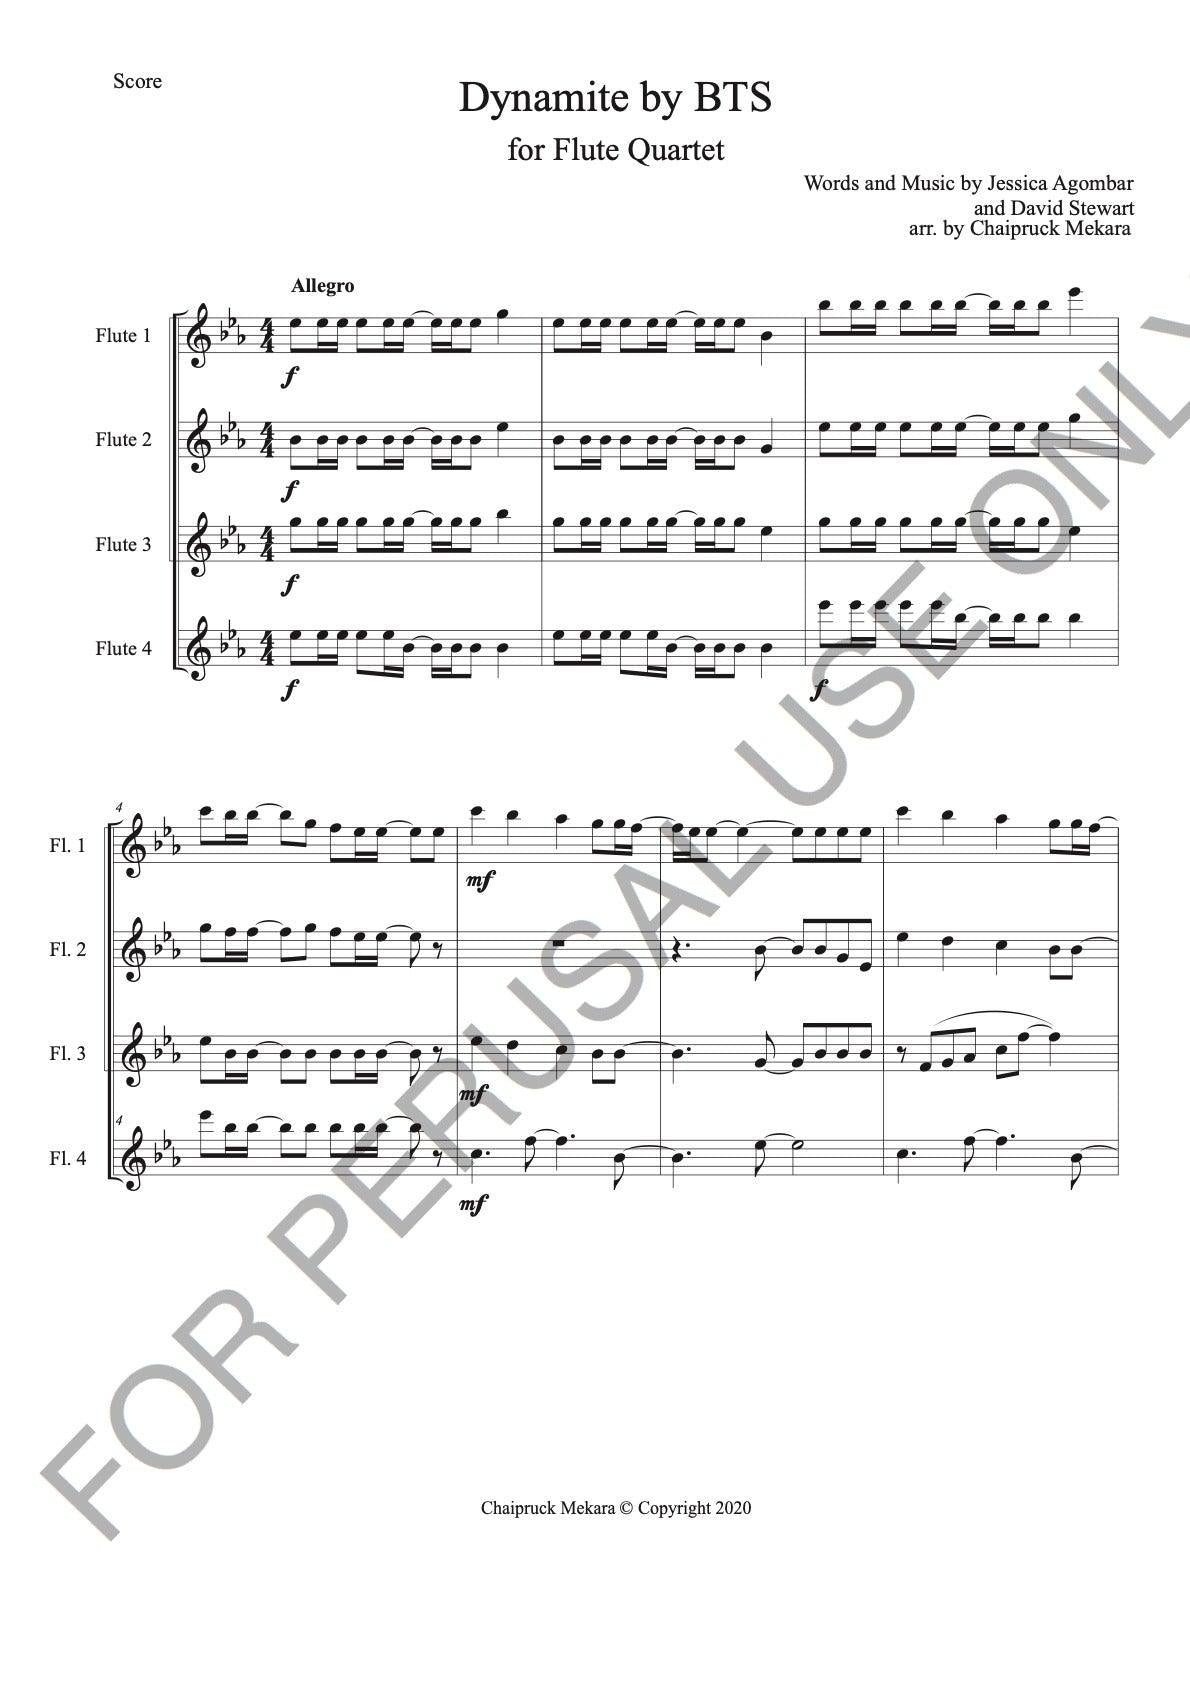 Flute Quartet sheet music: BTS Dynamite - ChaipruckMekara